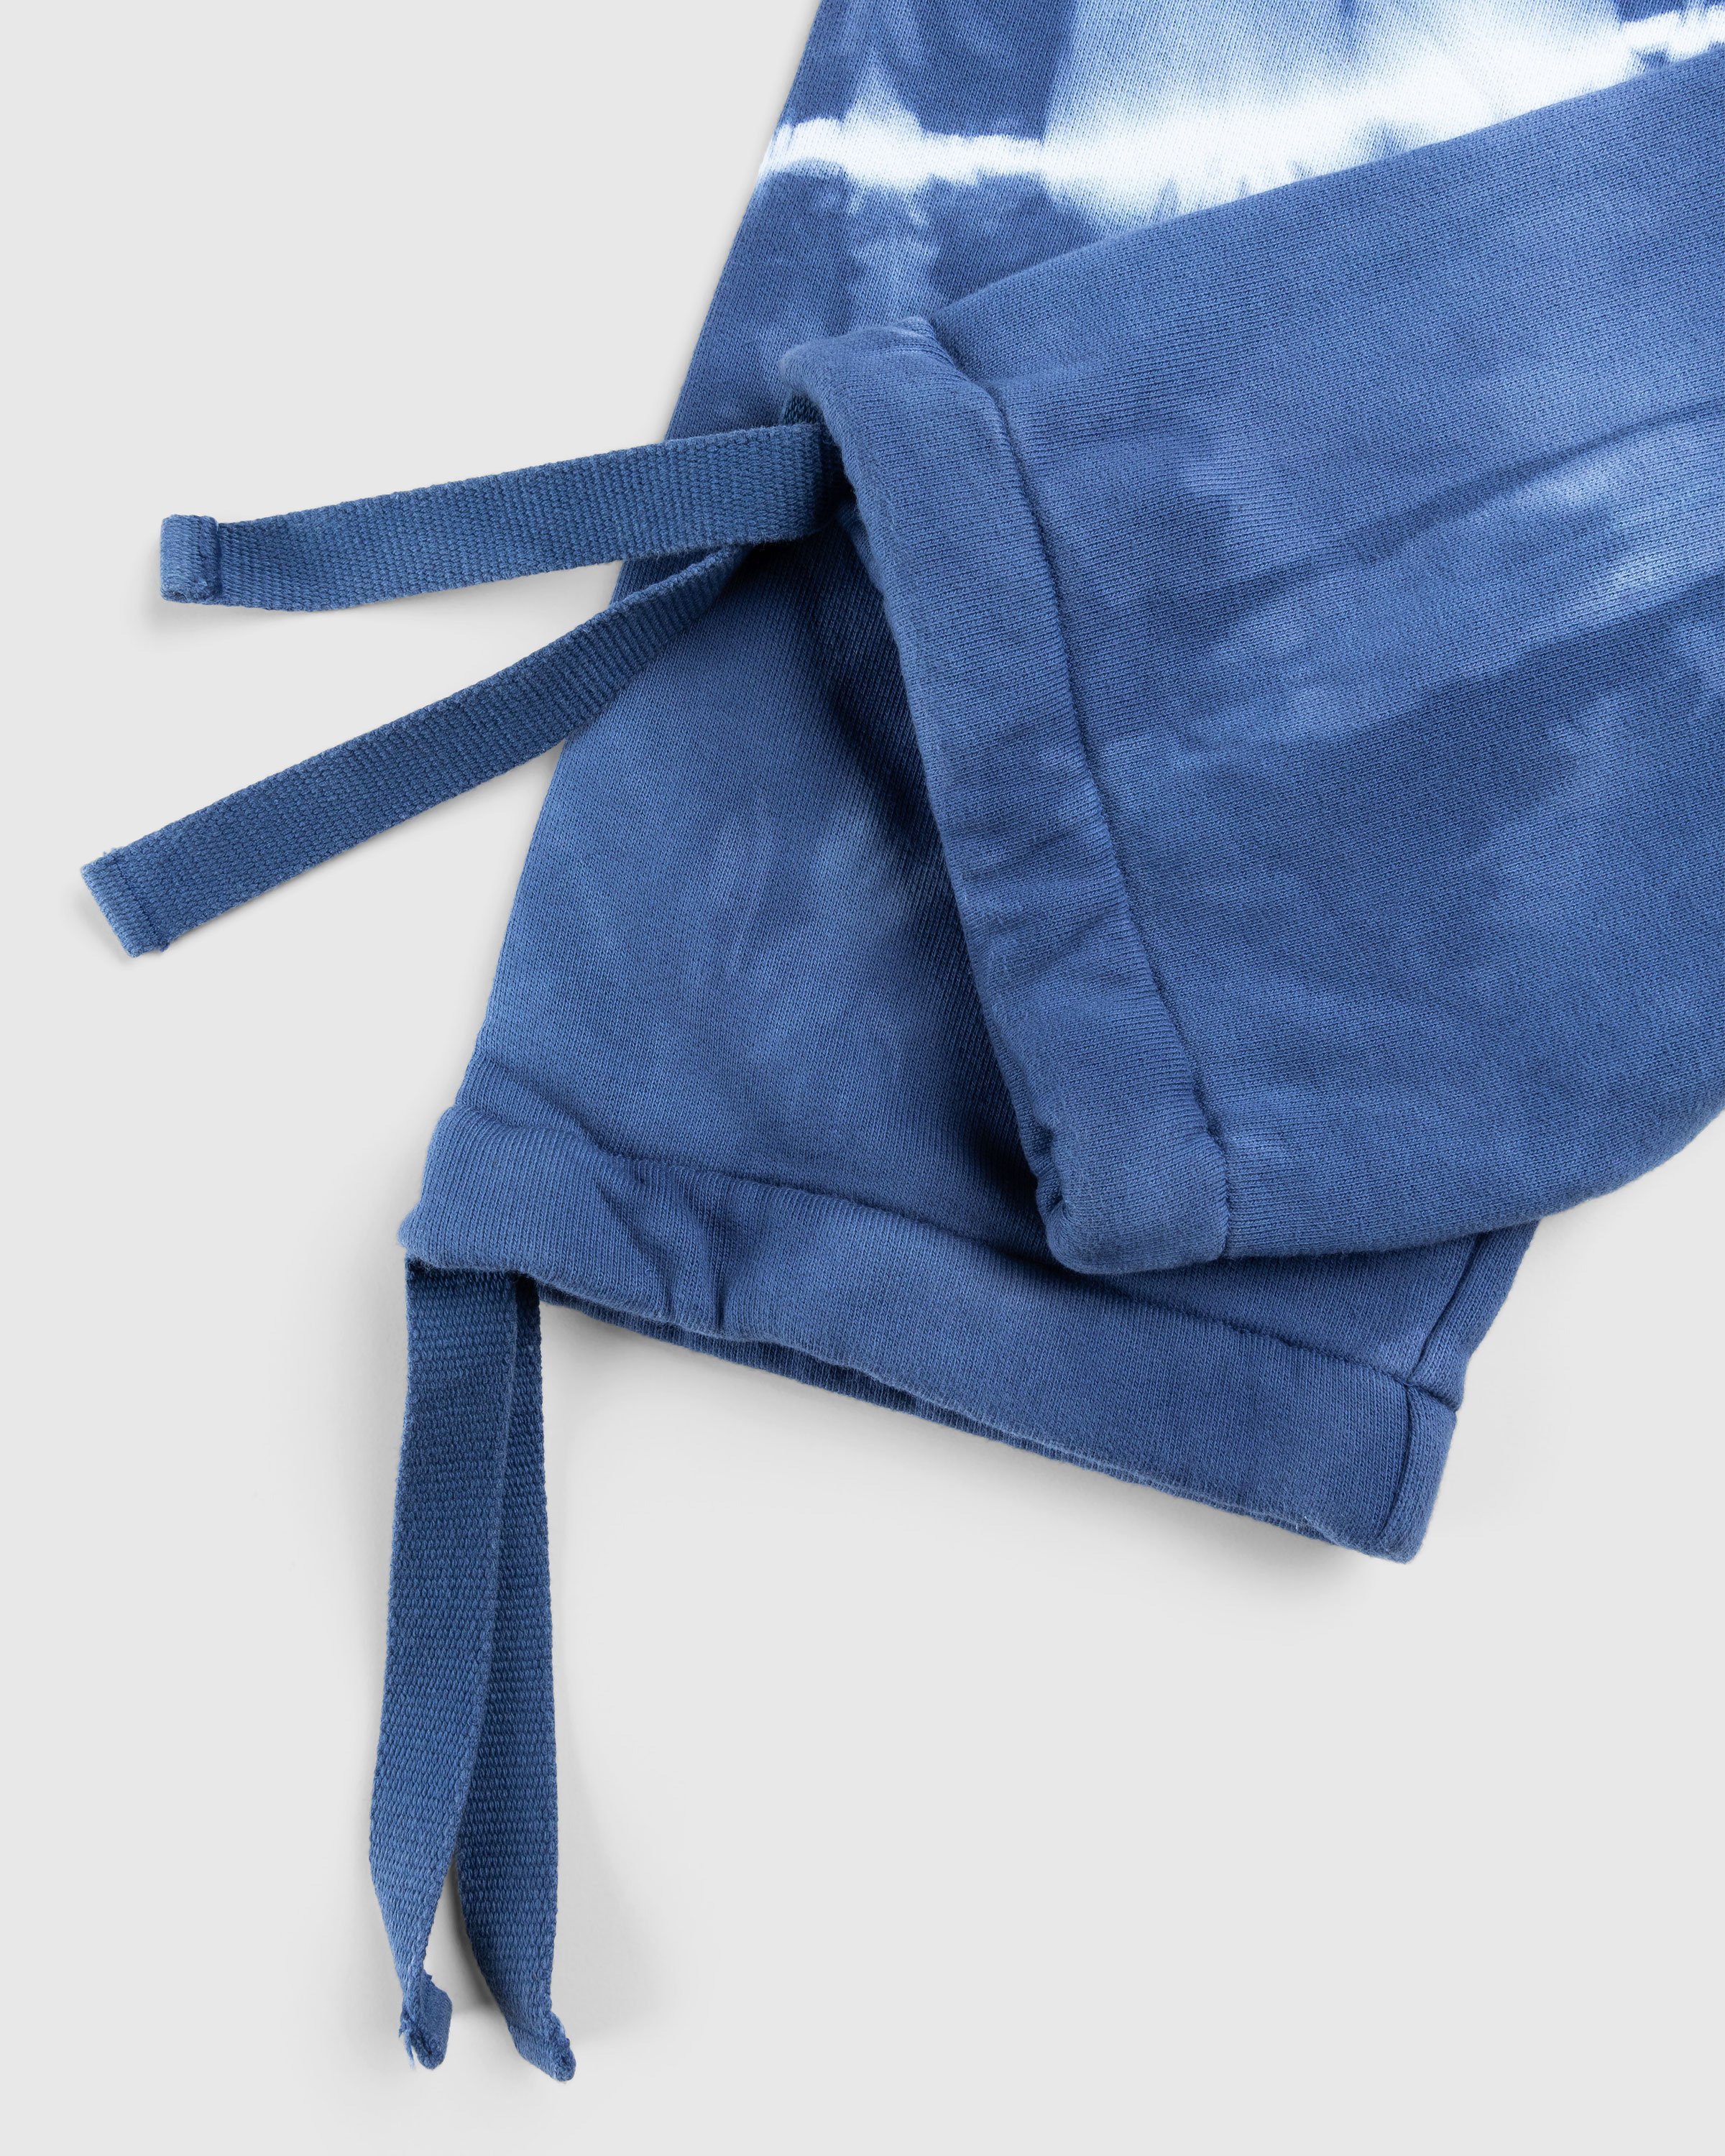 Stüssy x Dries van Noten - Tie Dye Pant - Clothing - Blue - Image 5